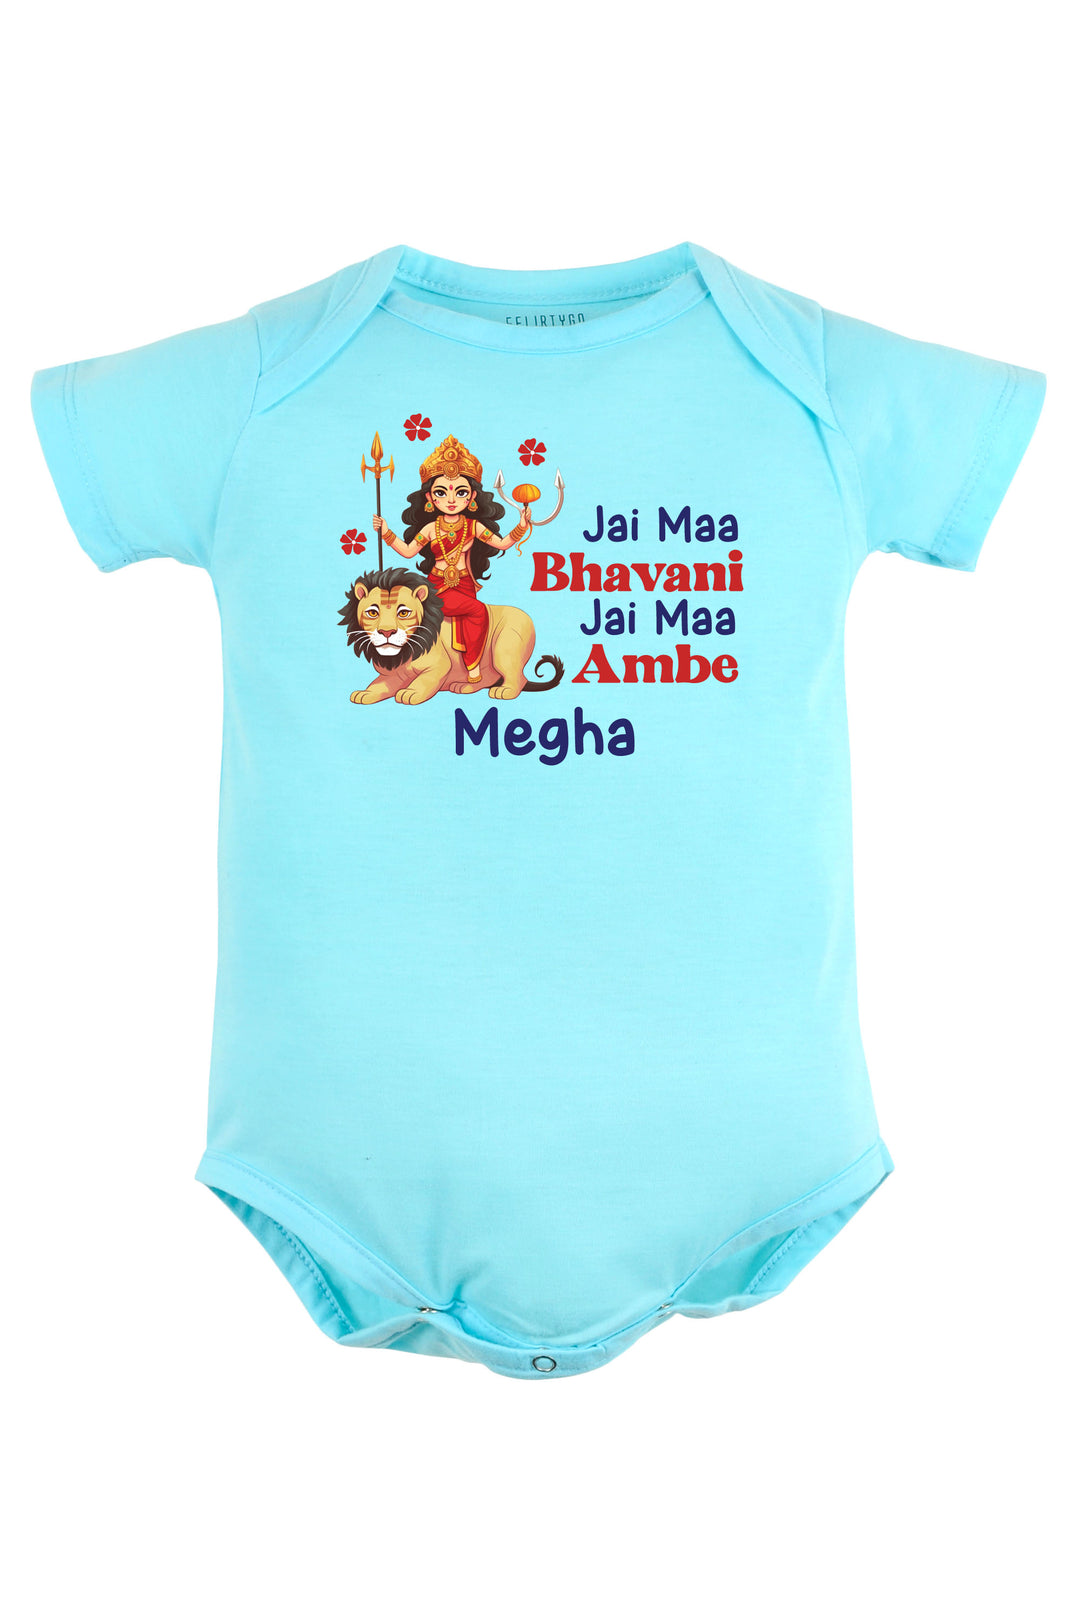 Jai Maa Bhavani Jai Maa Ambe Baby Romper | Onesies w/ Custom Name